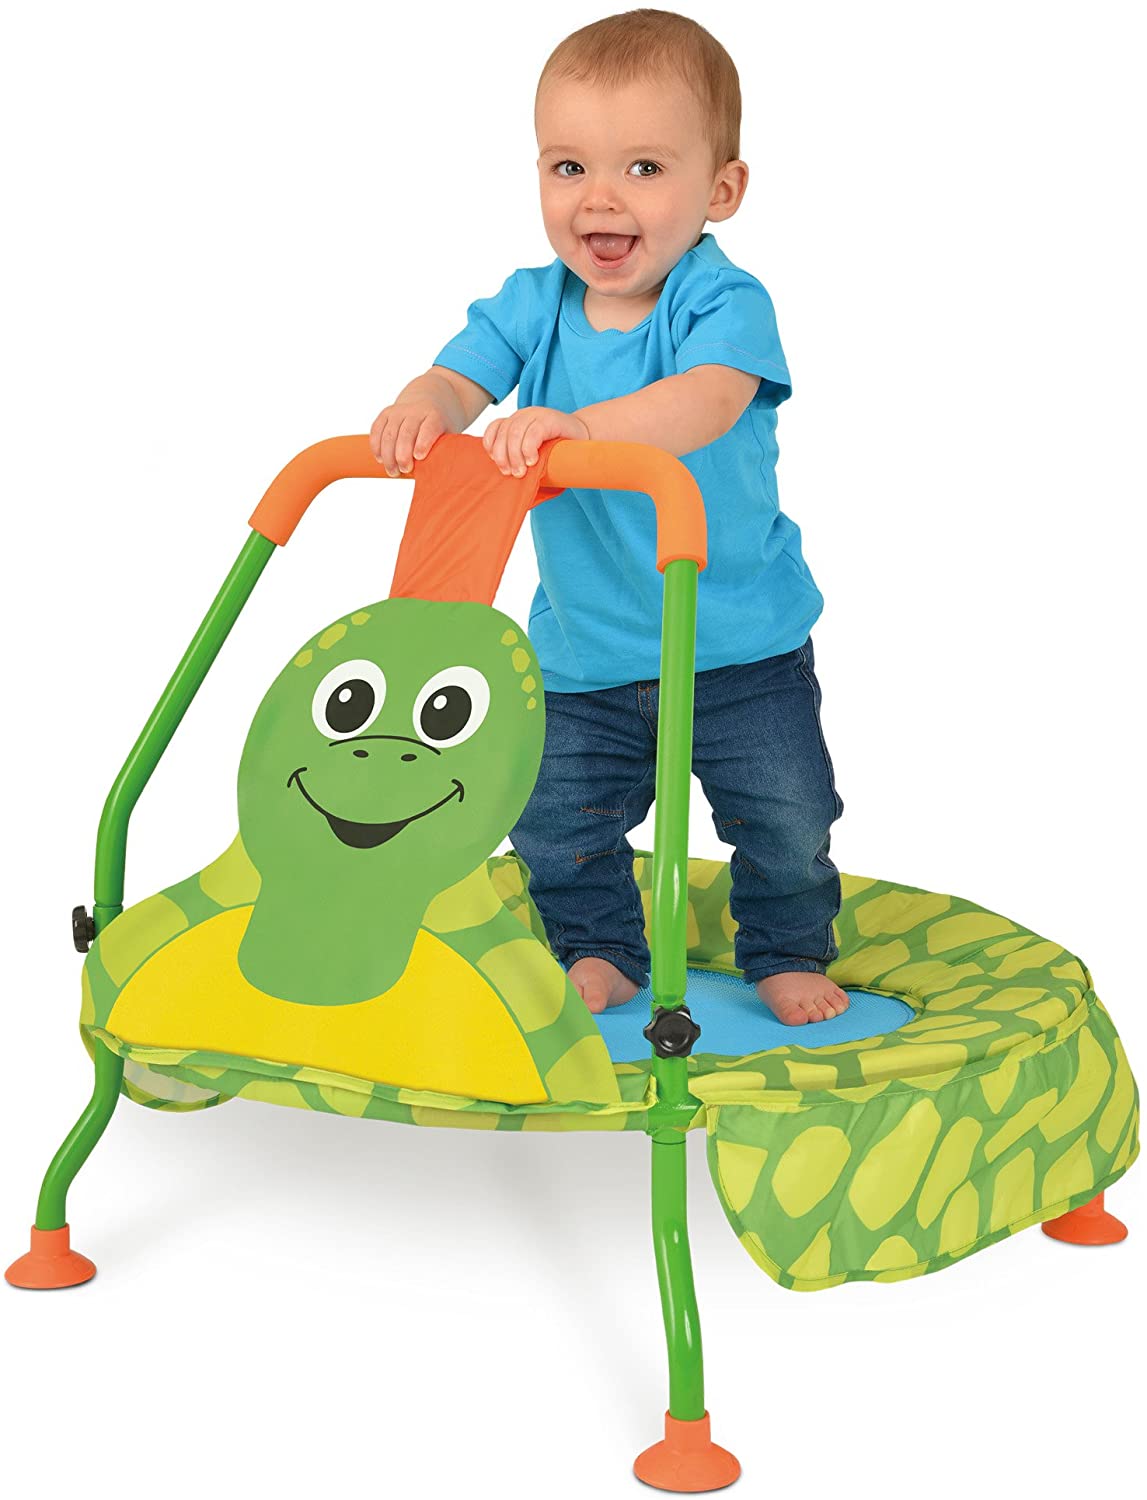 Toddler Trampoline - Galt Nursery Trampoline